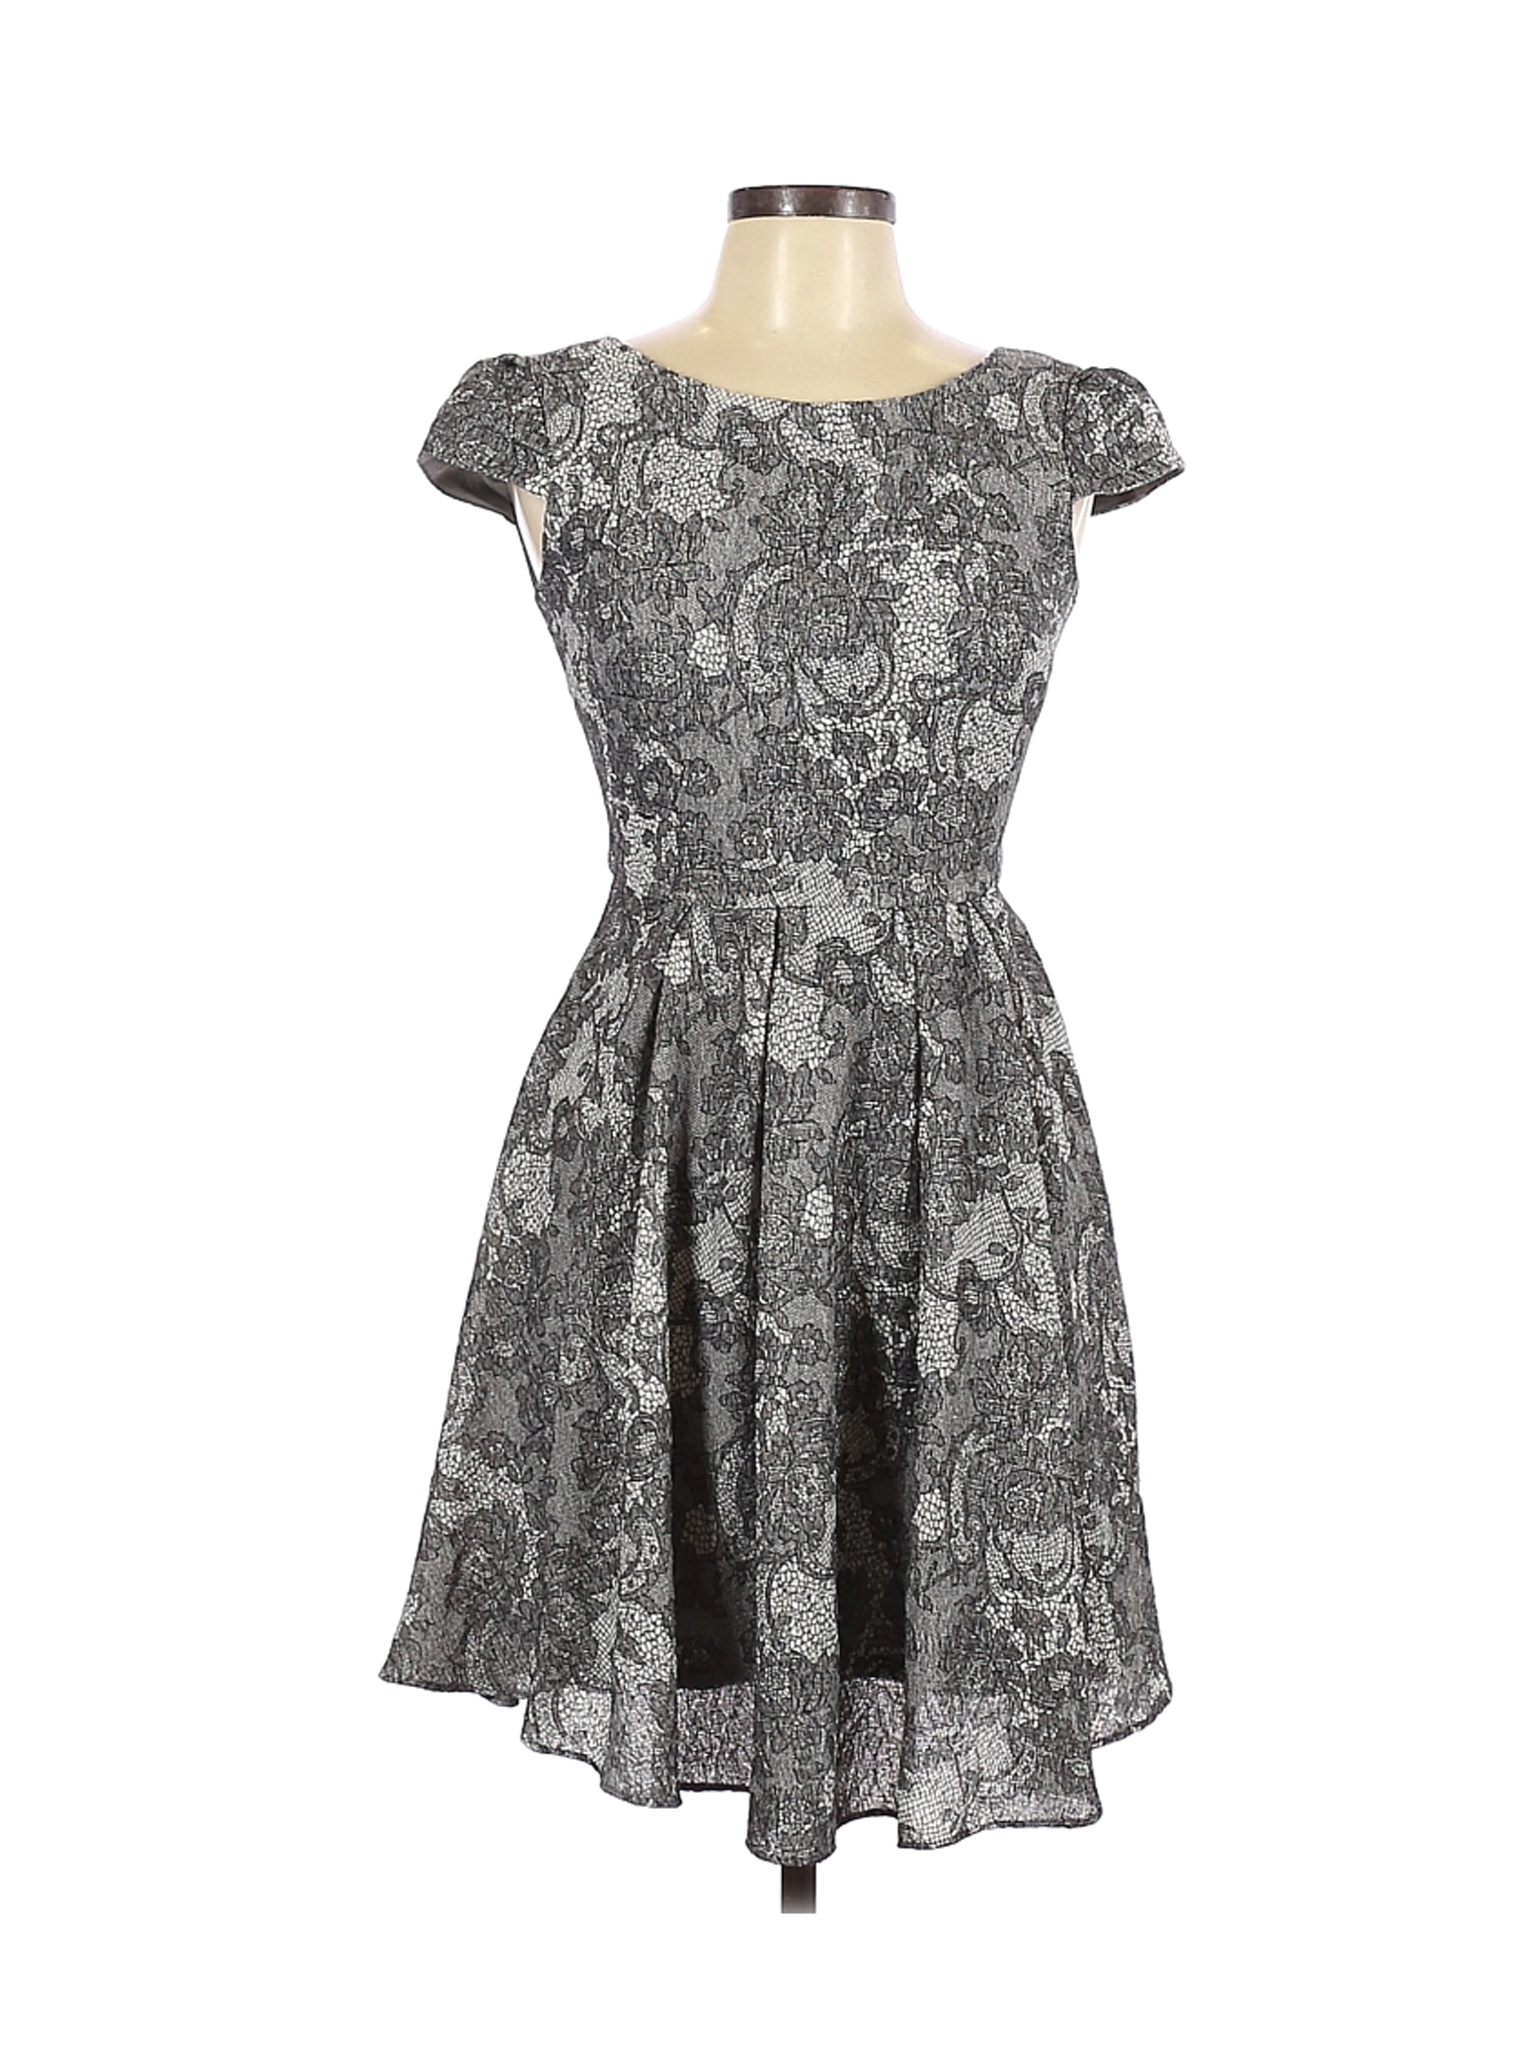 Betsey Johnson Women Gray Cocktail Dress 6 | eBay